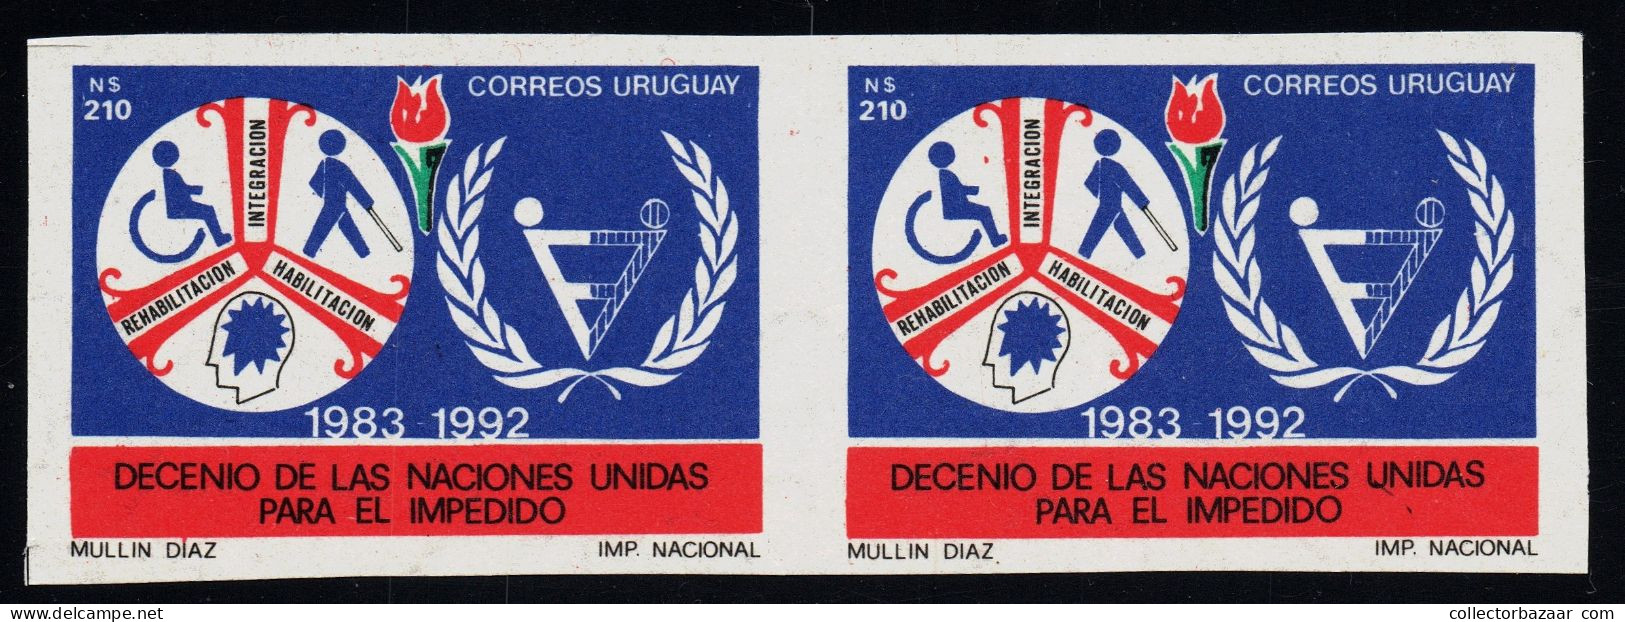 Handicap Menta Disease Blind Wheelchair Uruguay ONU Imperforated Pair MNH - Handicaps